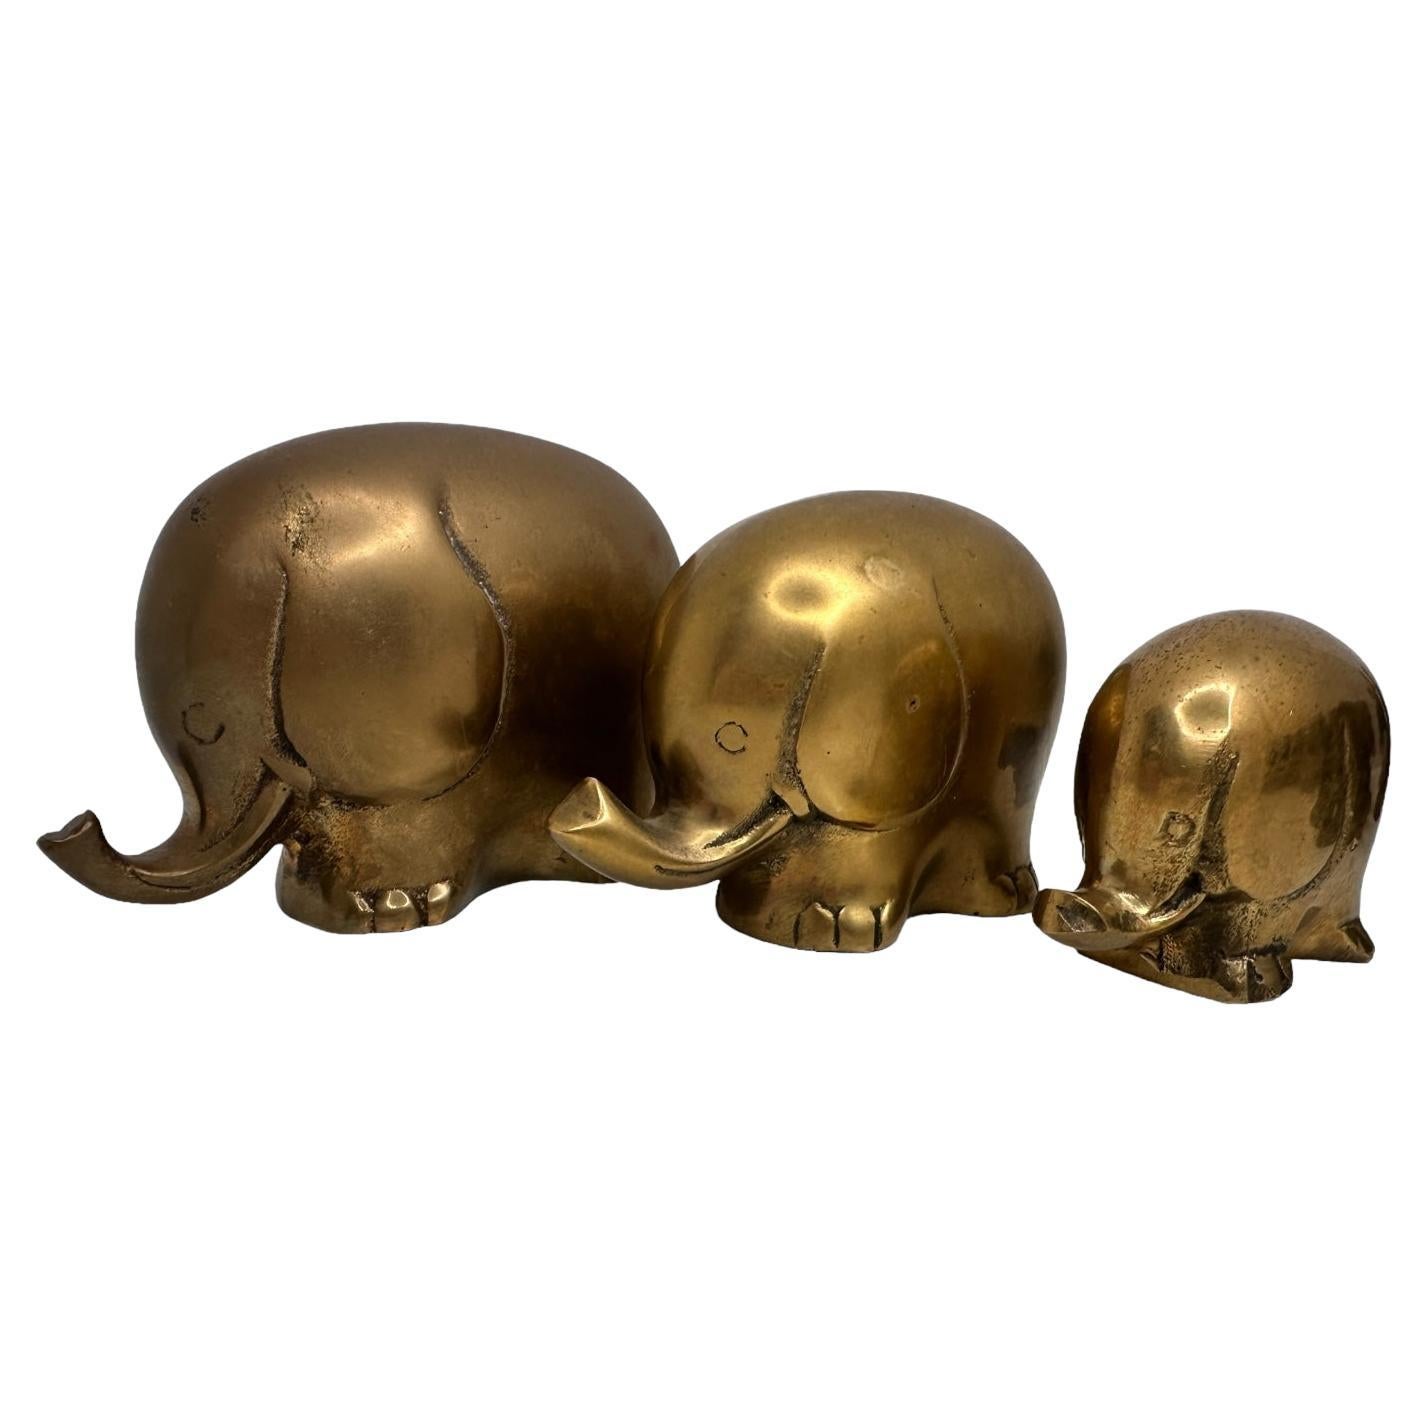 Three Decorative Elephant Sculpture Statues Brass Midcentury Modern German For Sale